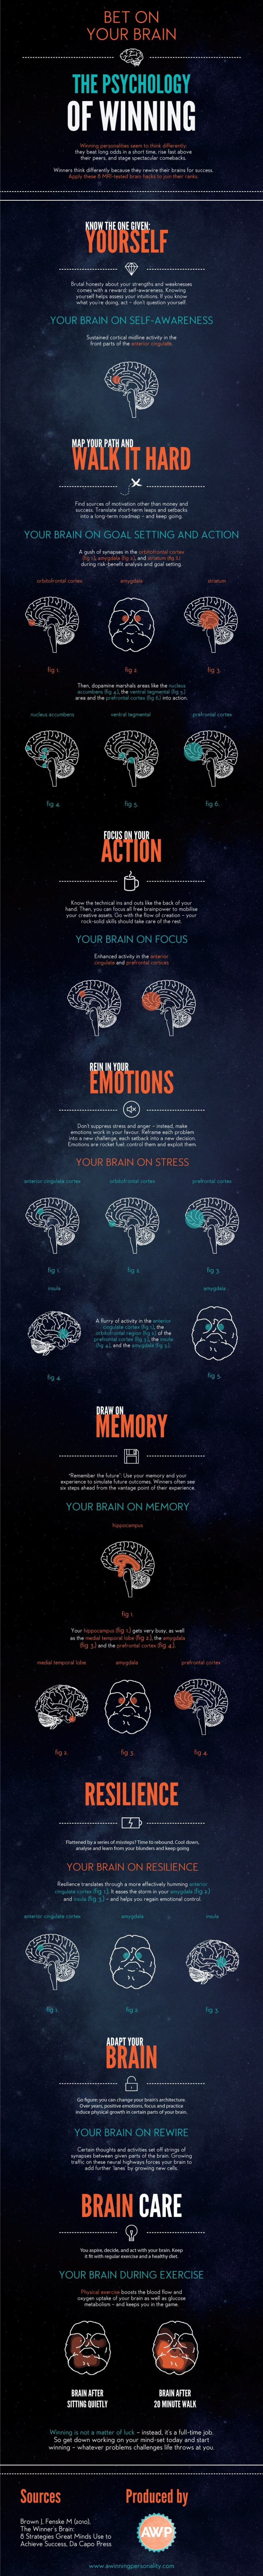 the-psychology-of-winning-infographic_52c69b8e5930c_w1500